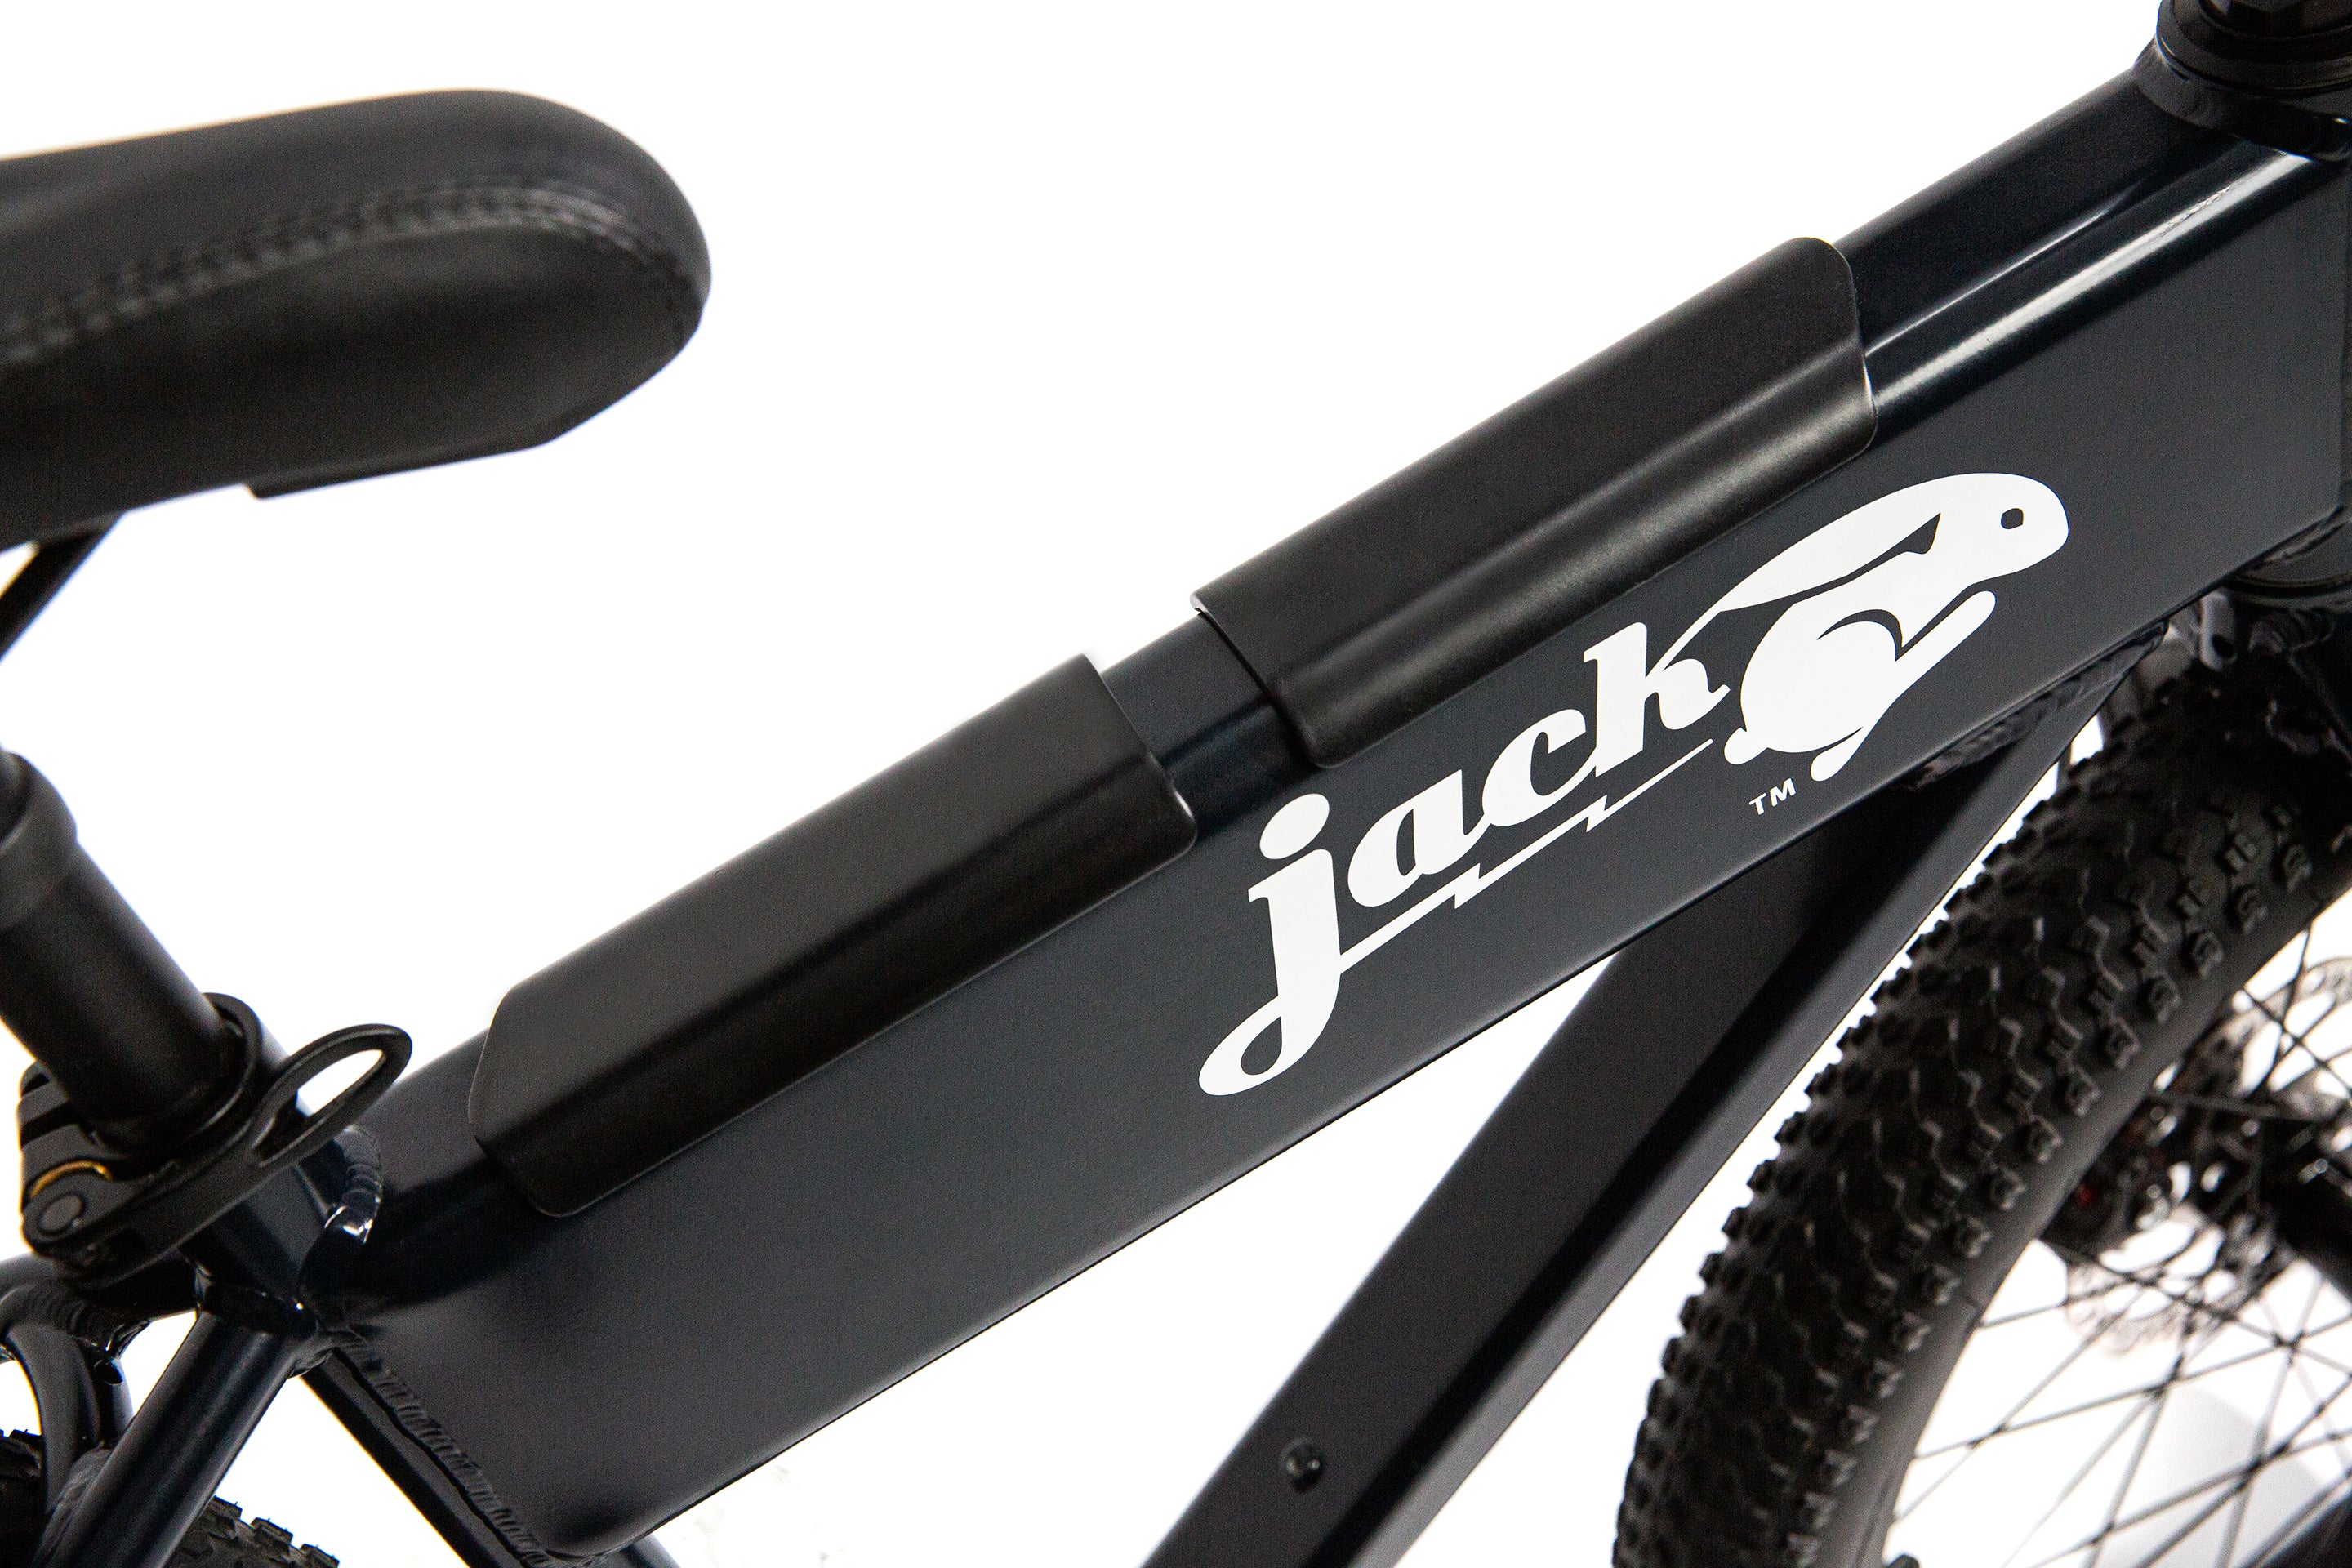 JackRabbit XG - Lightweight & Compact XL Micro eBike, Black